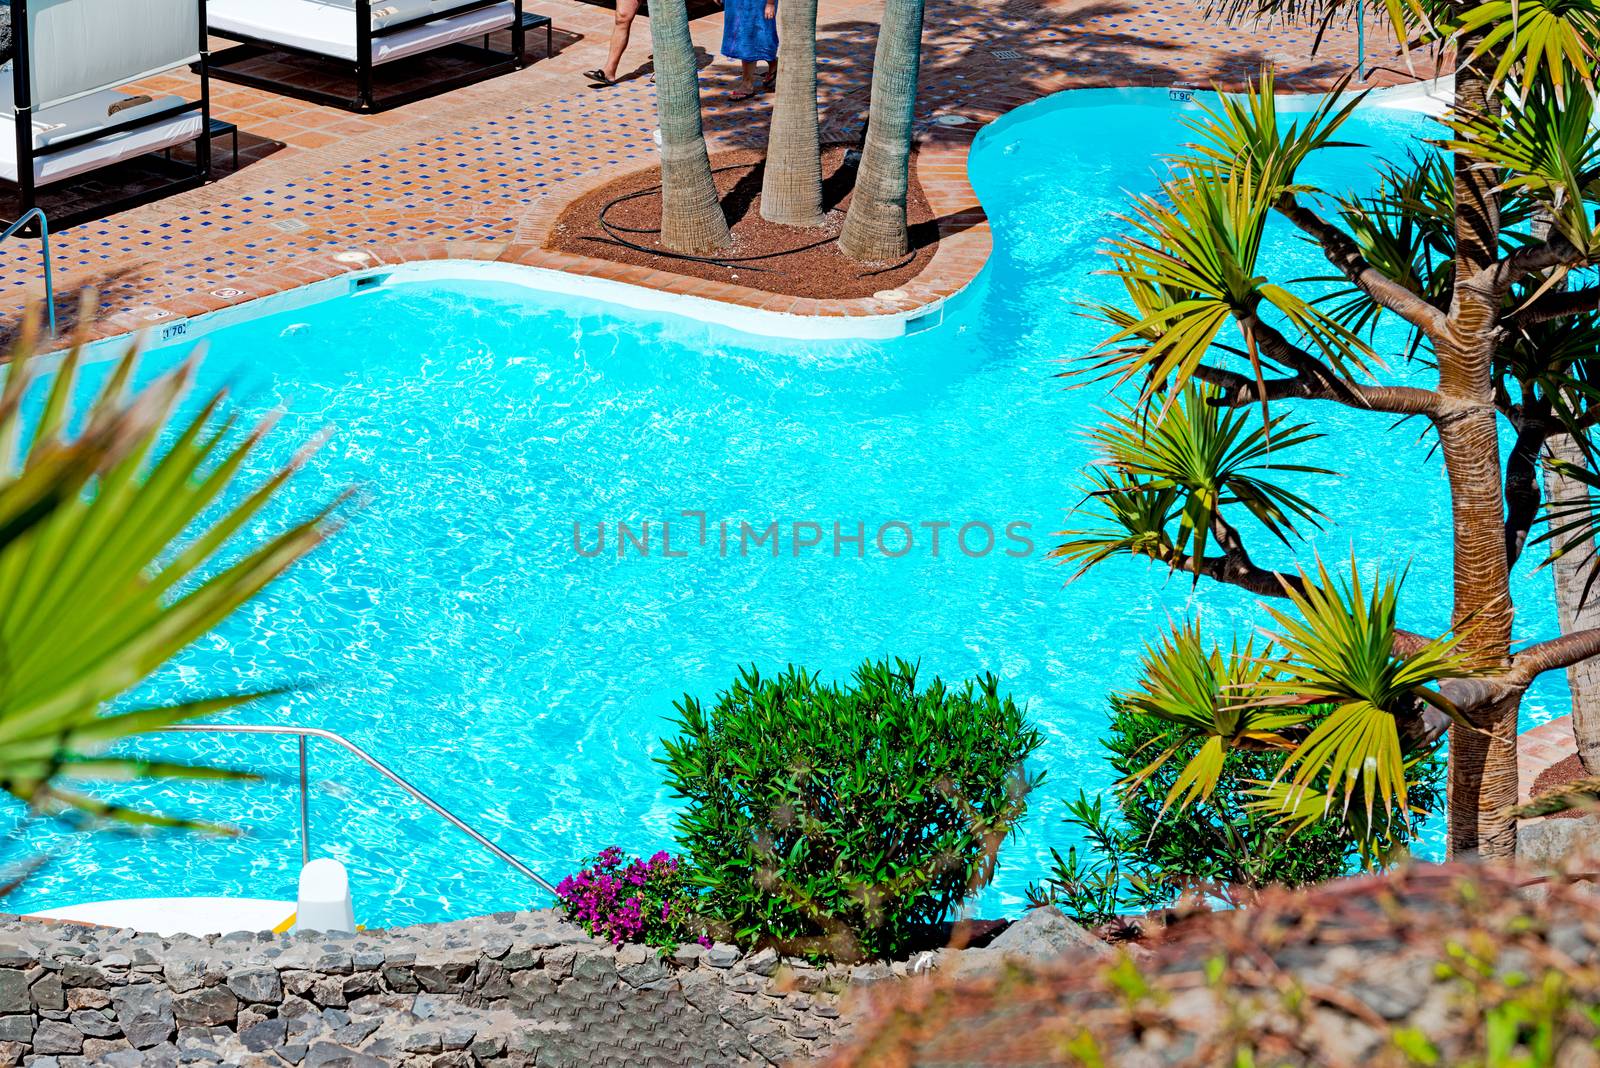 Swimming pool at resort on Tenerife Island, Spain 